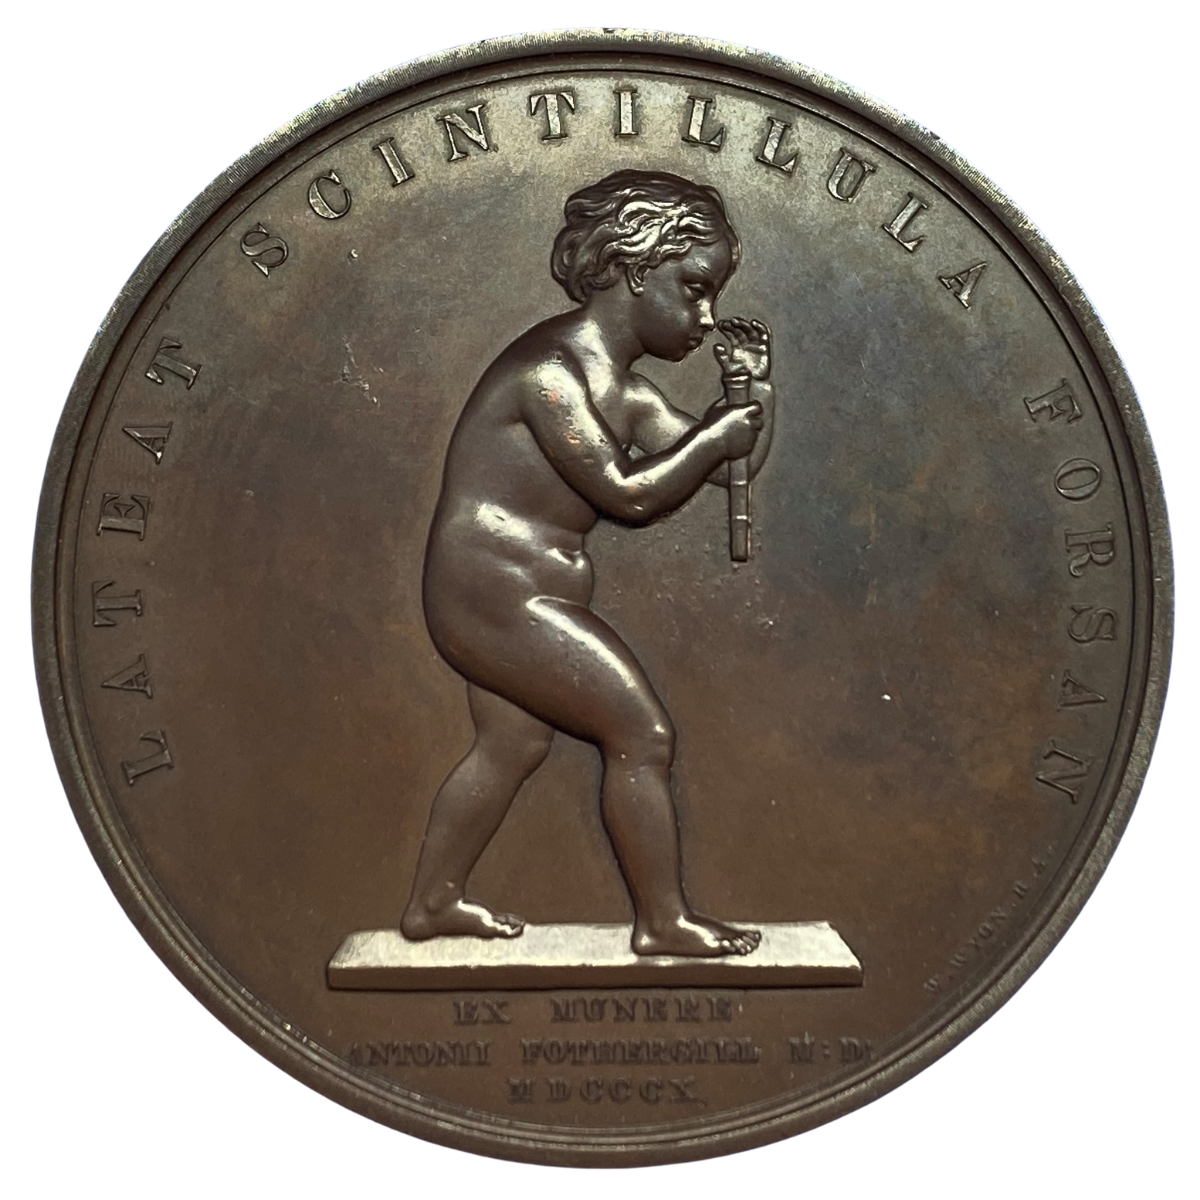 1810 Life Saving Medal - Royal Humane Society Historical Medallion by W Wyon